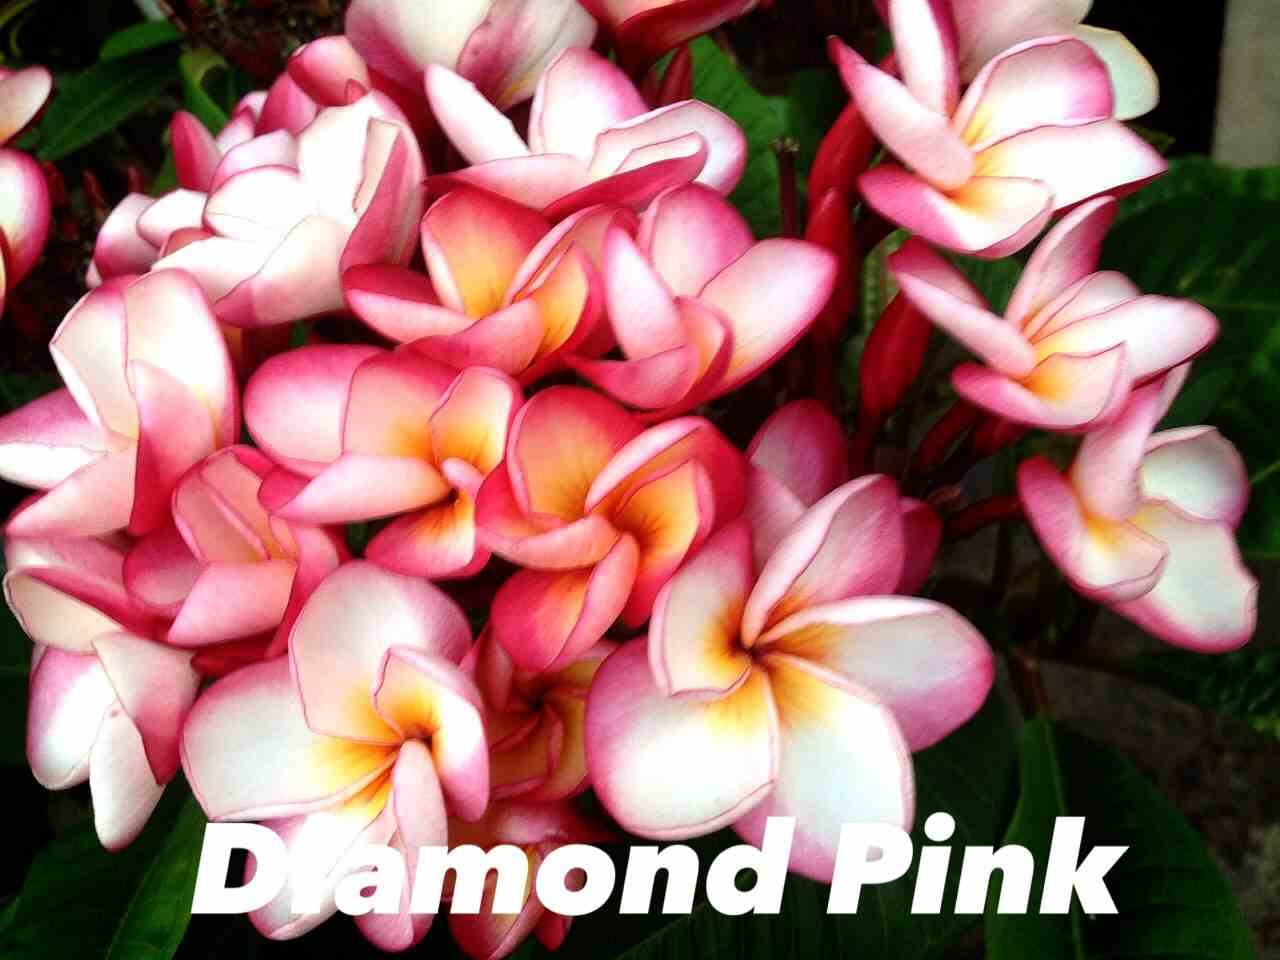 Plumeria rubra "diamond pink" (frangipanier) taille pot de 2 litres ? 20/30 cm -   blanc/jaune/rose